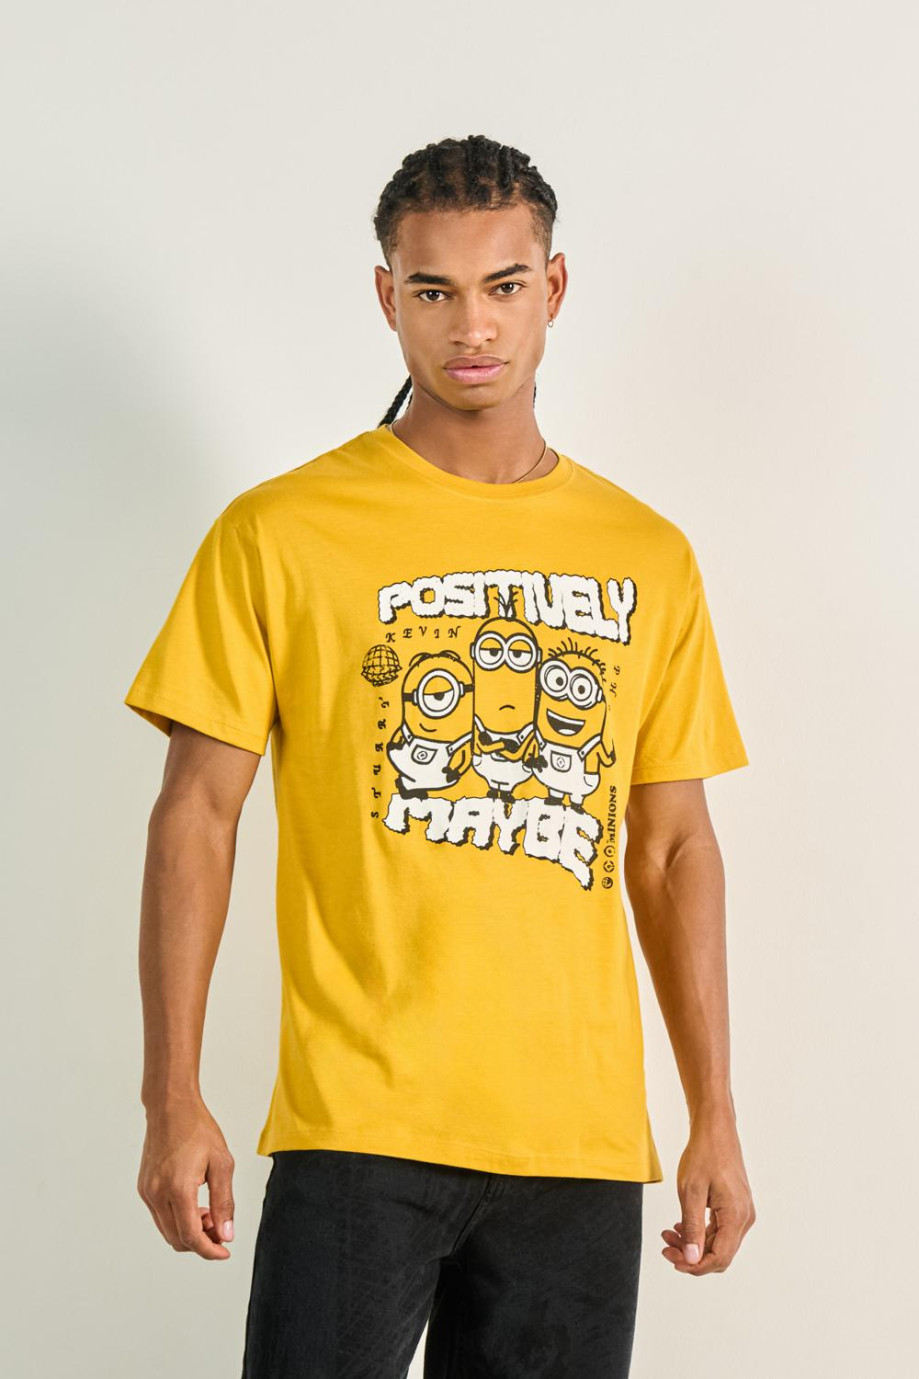 Camiseta amarilla manga corta con diseño de Minions